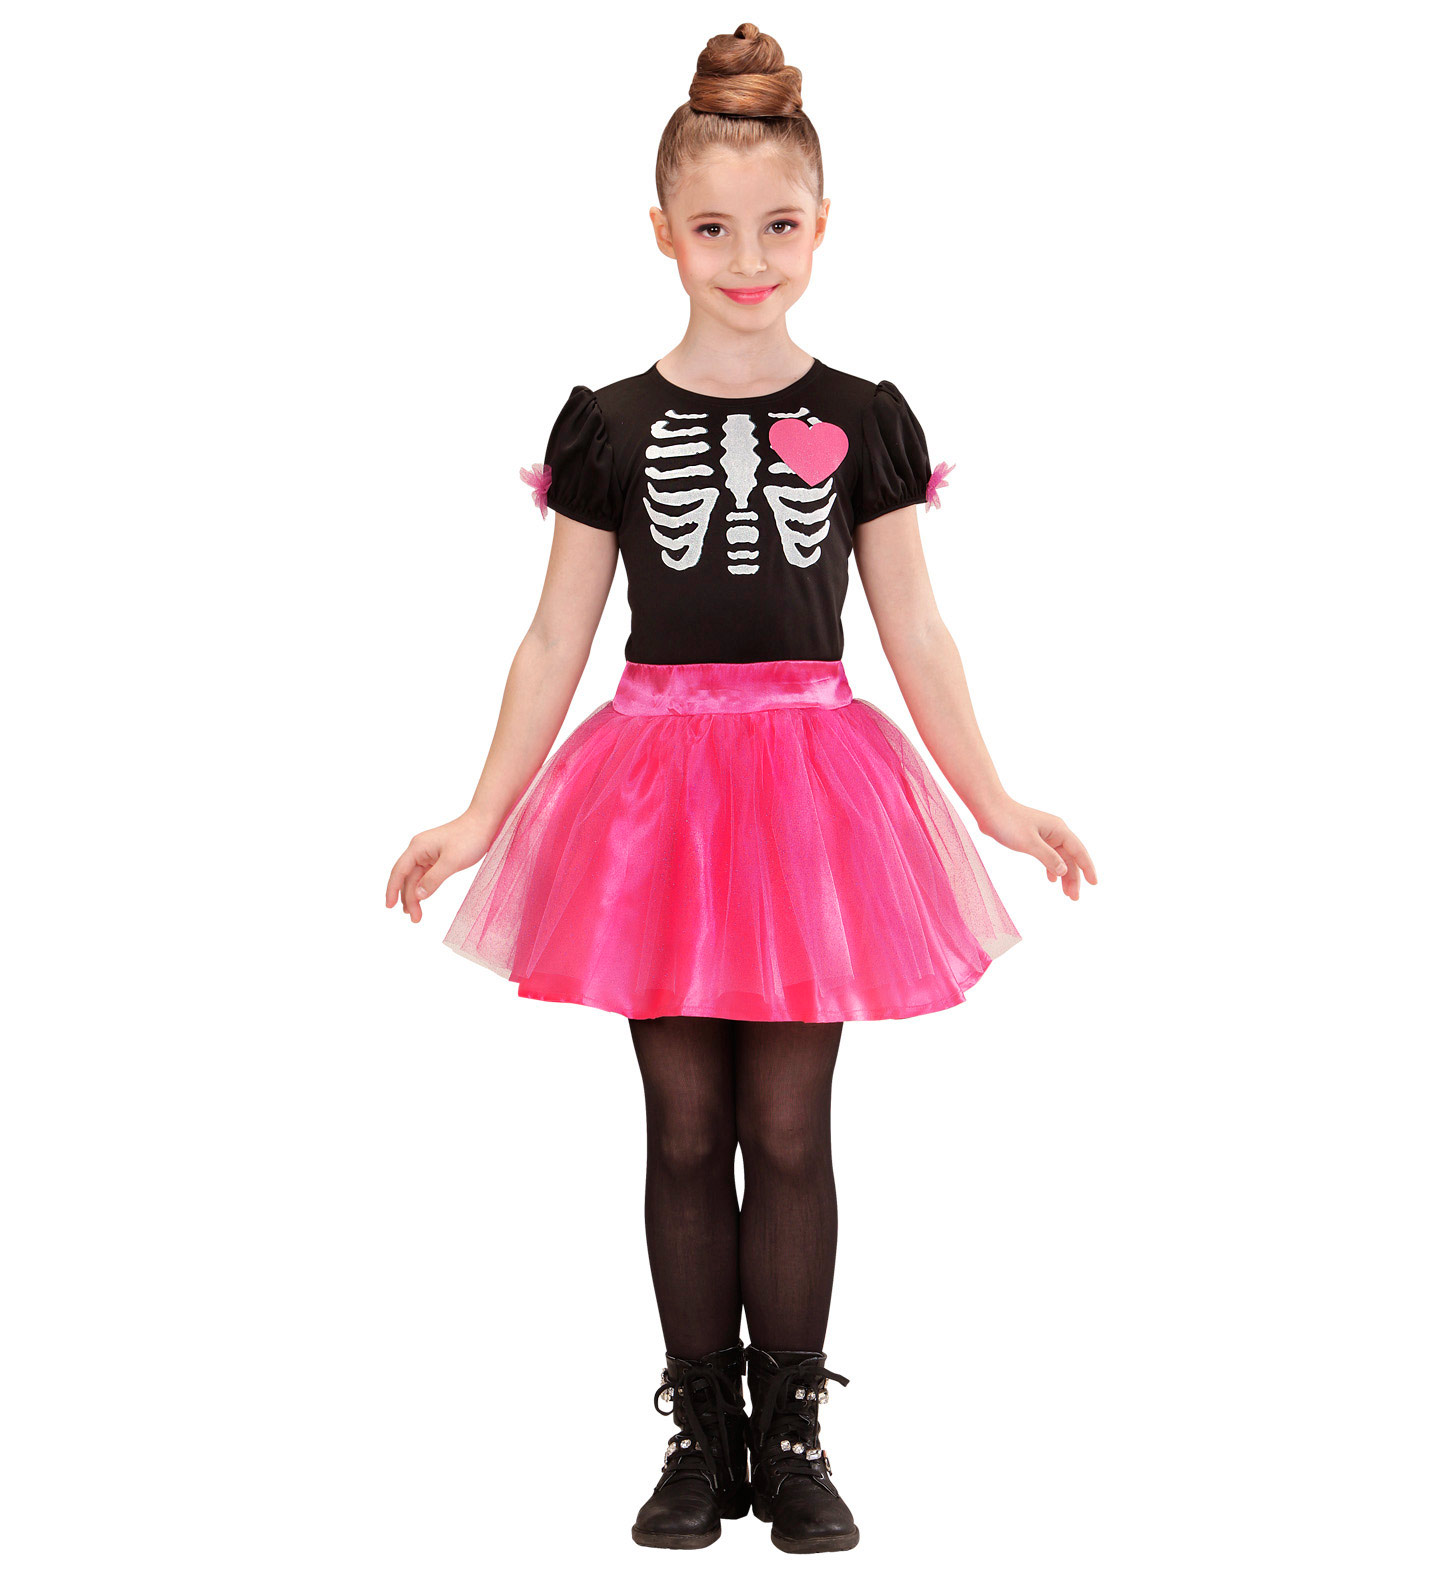 Costum schelet balerina halloween - 4 - 5 ani / 116cm